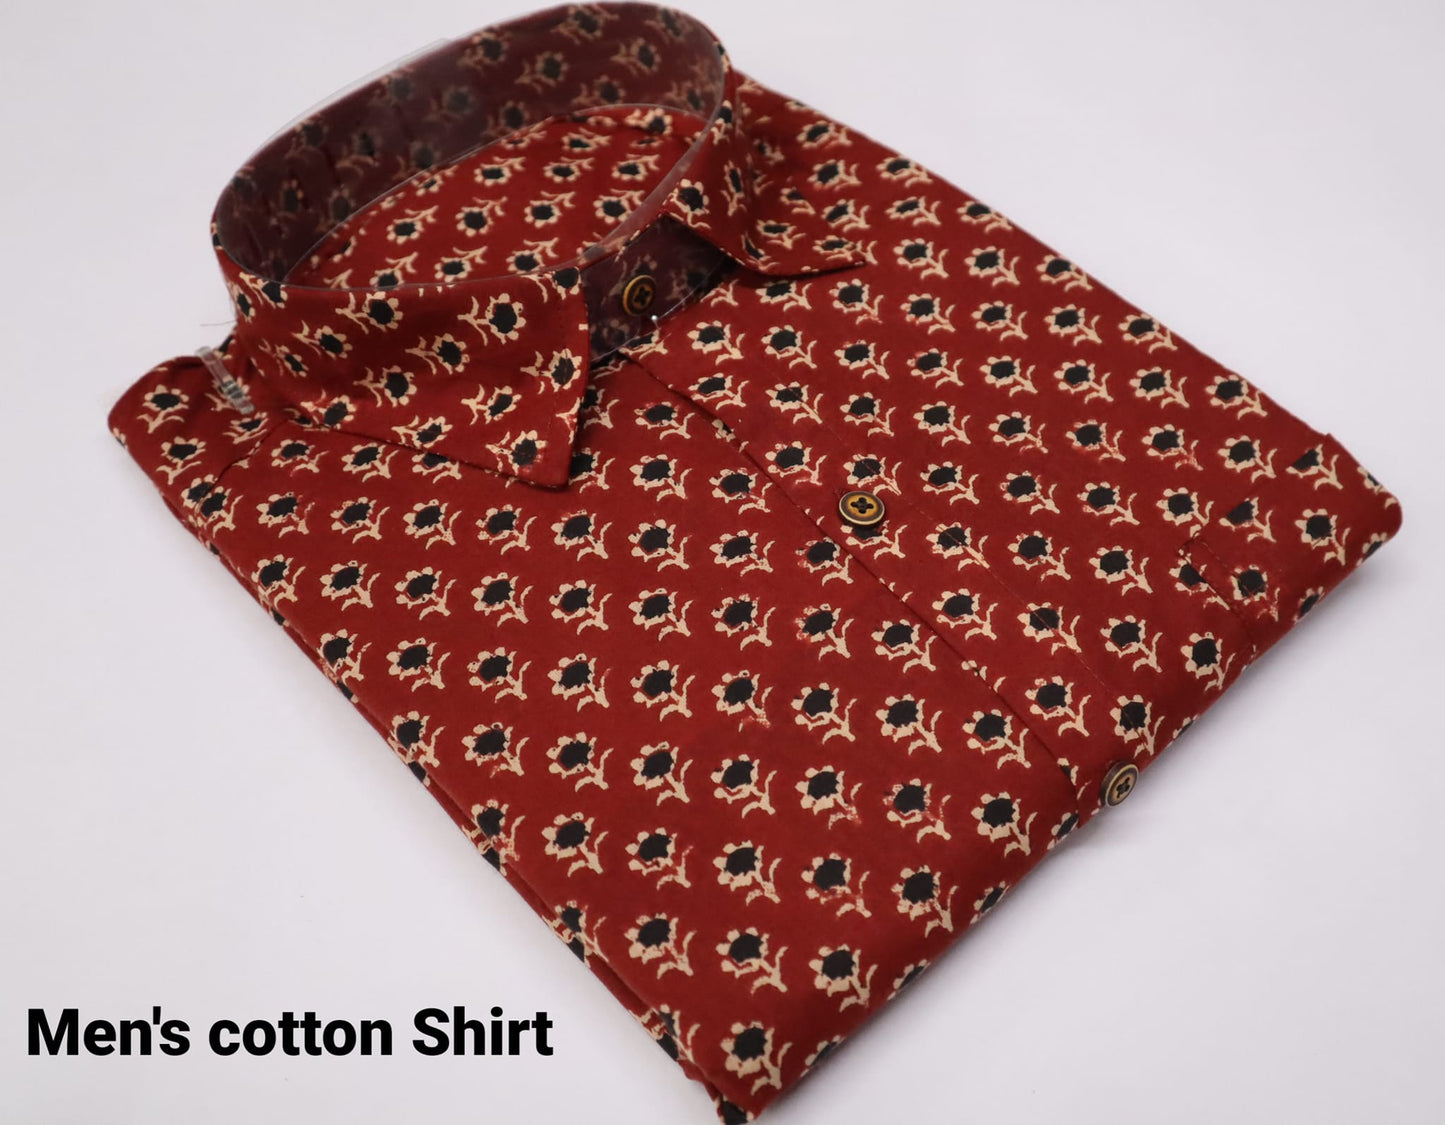 Men's Half Sleeves Cotton Shirt